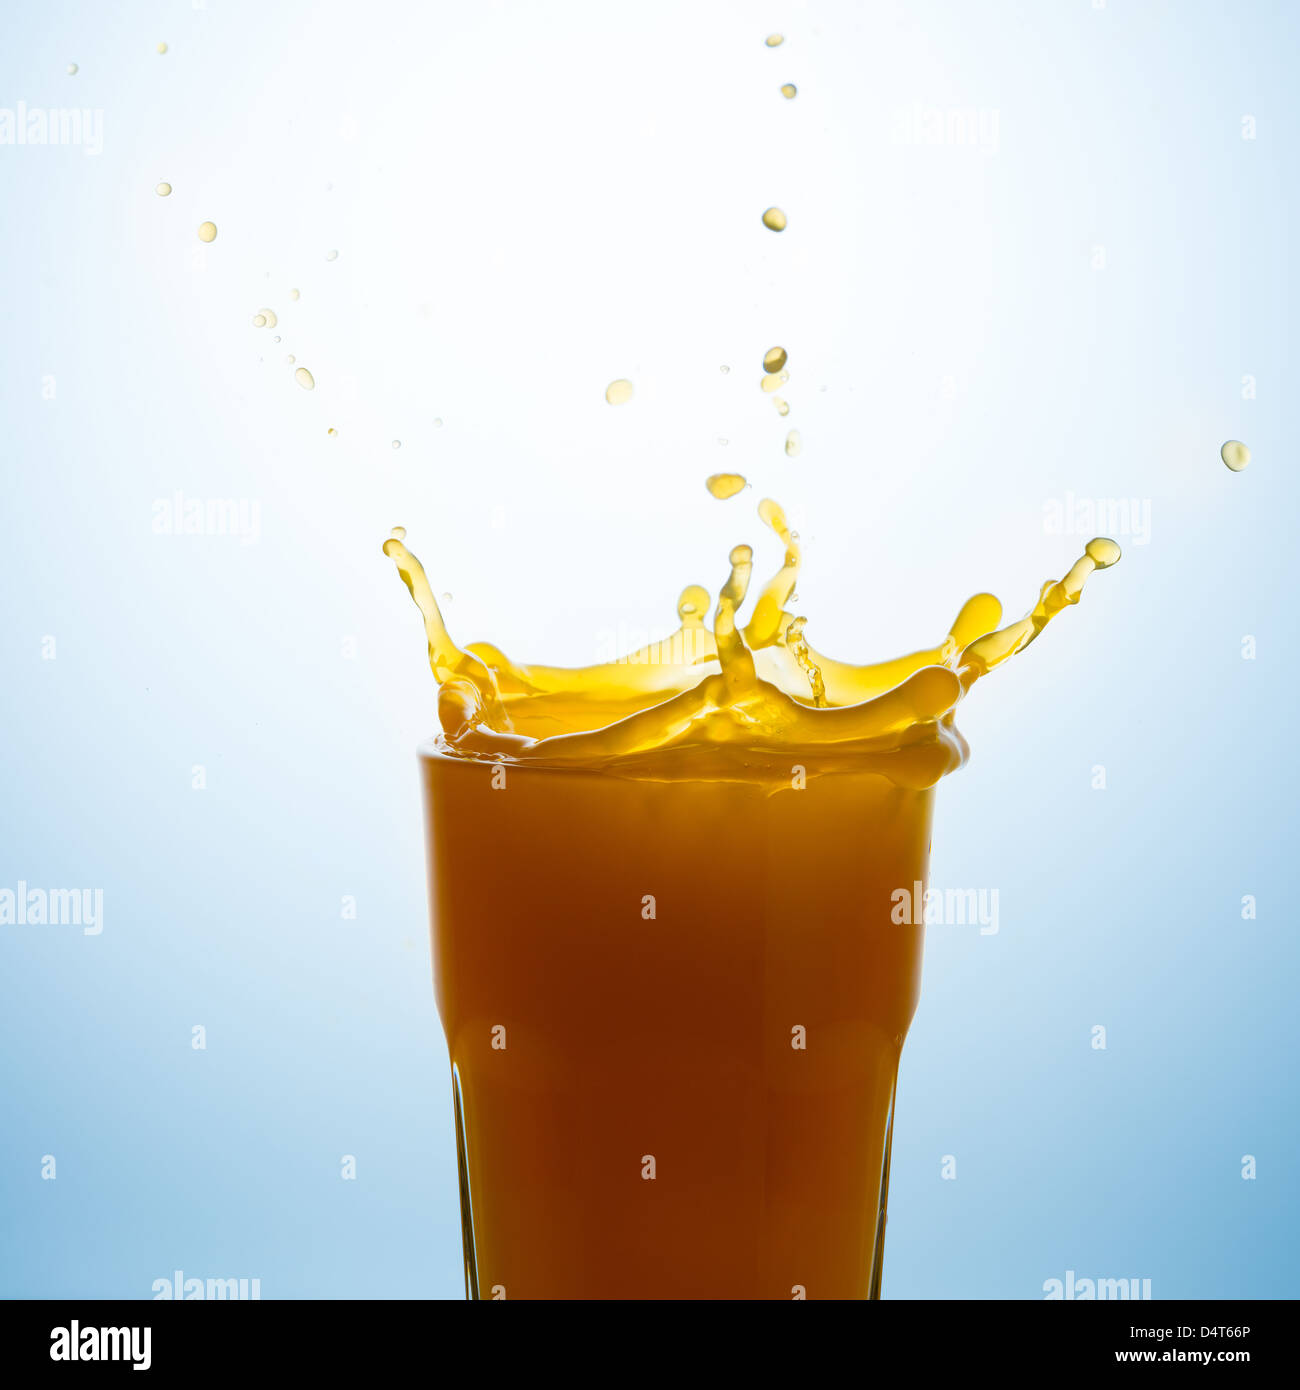 Splash en un vaso de jugo de naranja contra un fondo azul. Foto de stock